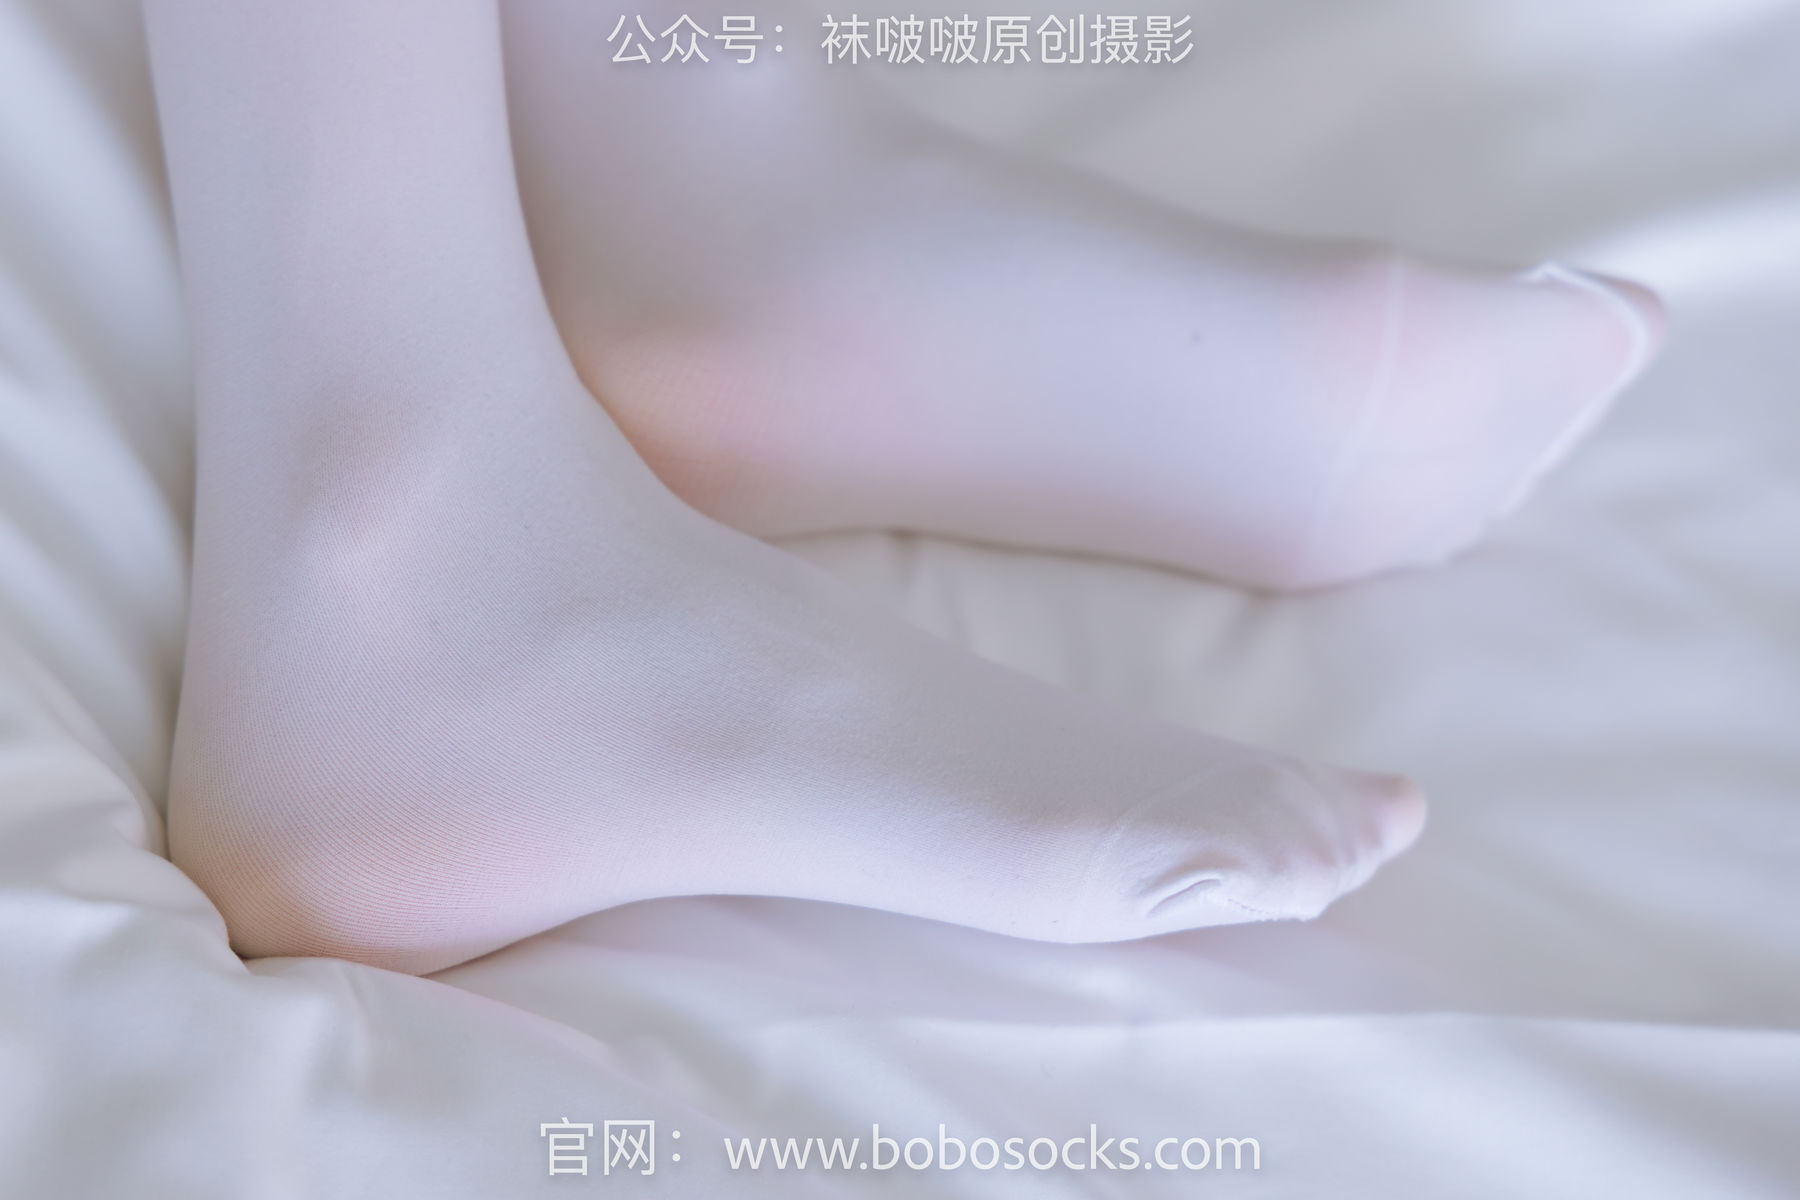 BoBoSocks袜啵啵 No.157 稚予-高跟鞋、白丝大腿袜、裸足/(140P)